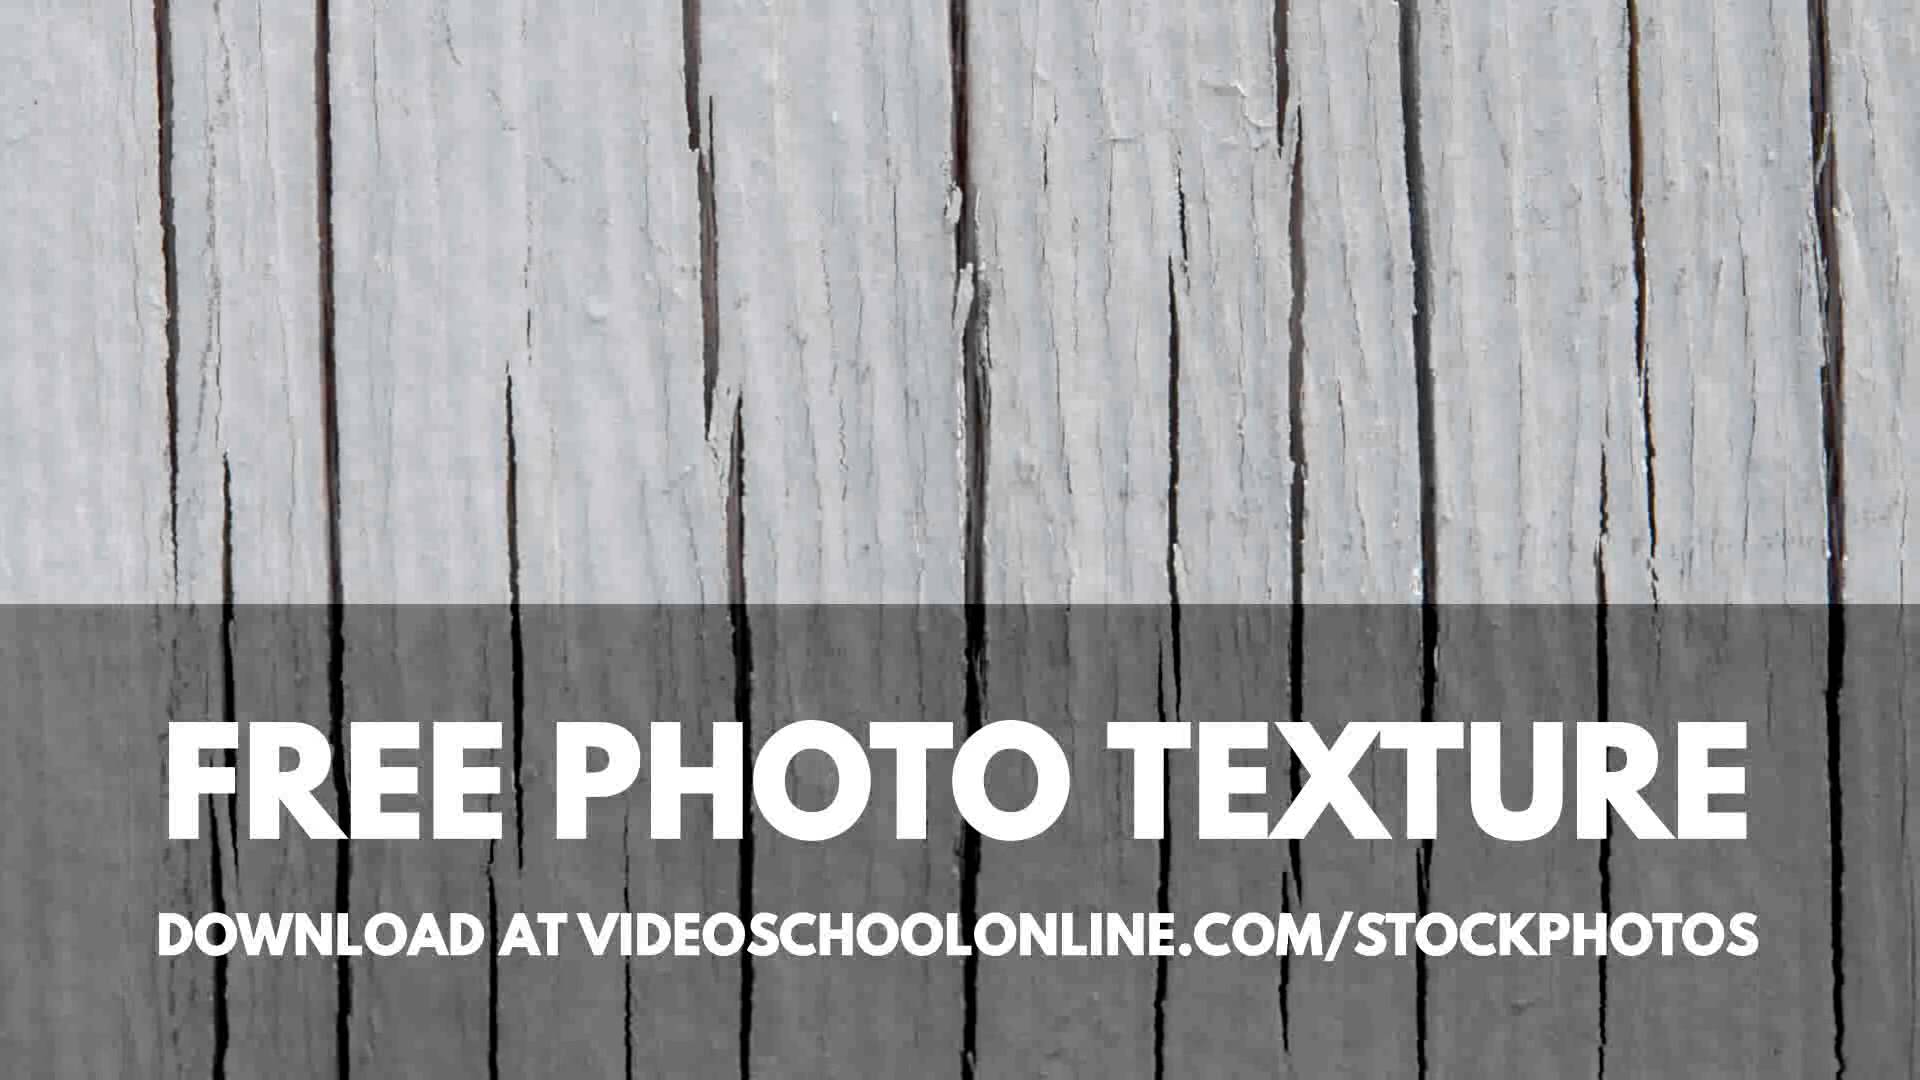 Cracked wood texture photo